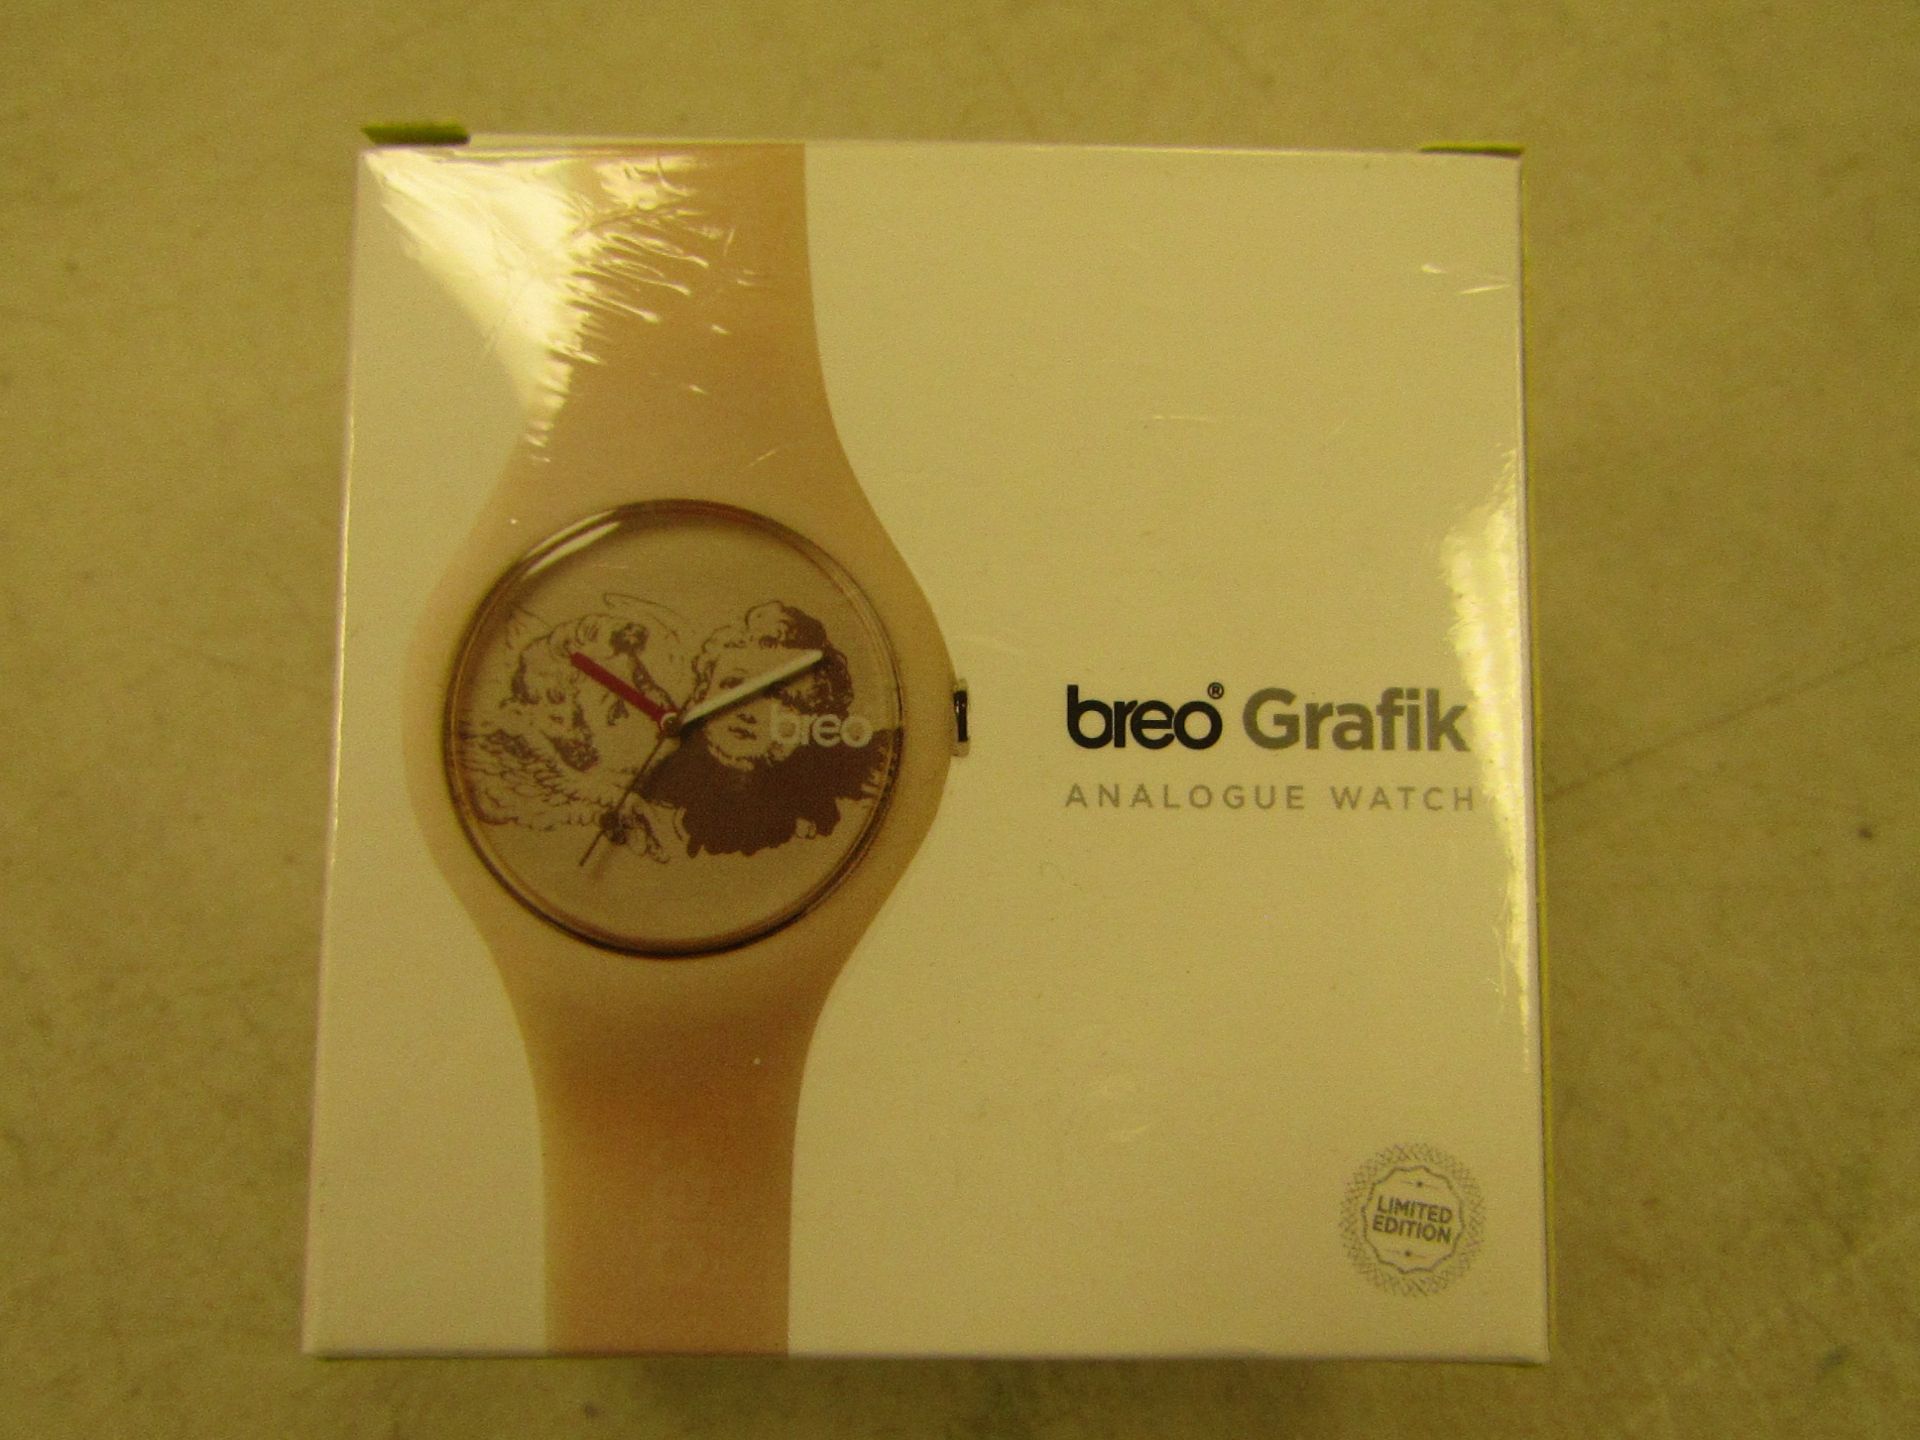 Breo Grafik analogue watch, new and boxed.